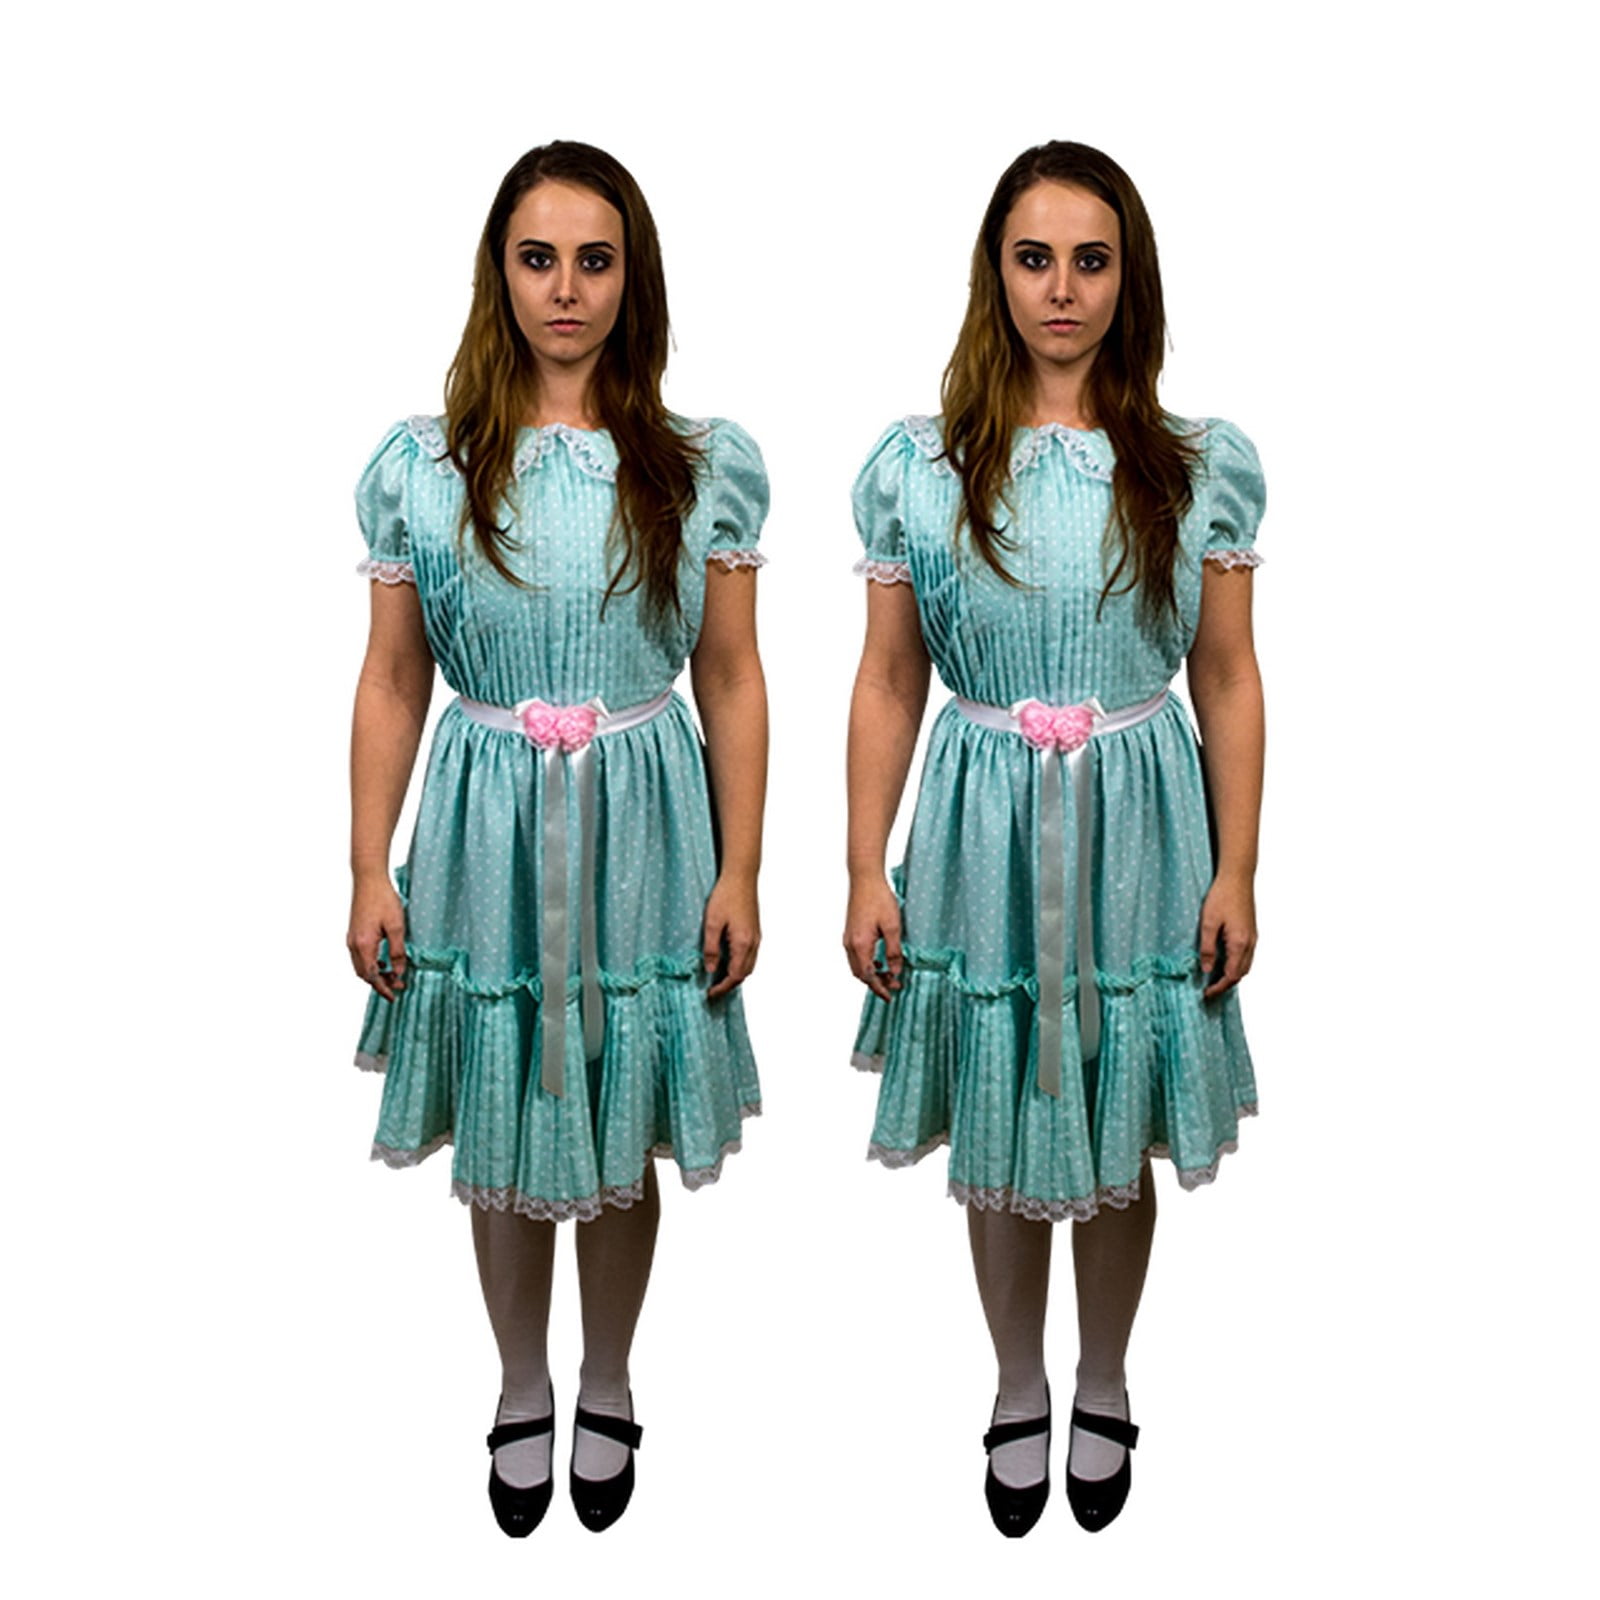 Creepy Sister Girl Fancy Dress The Shining Twins Kids Childs Halloween Costume 